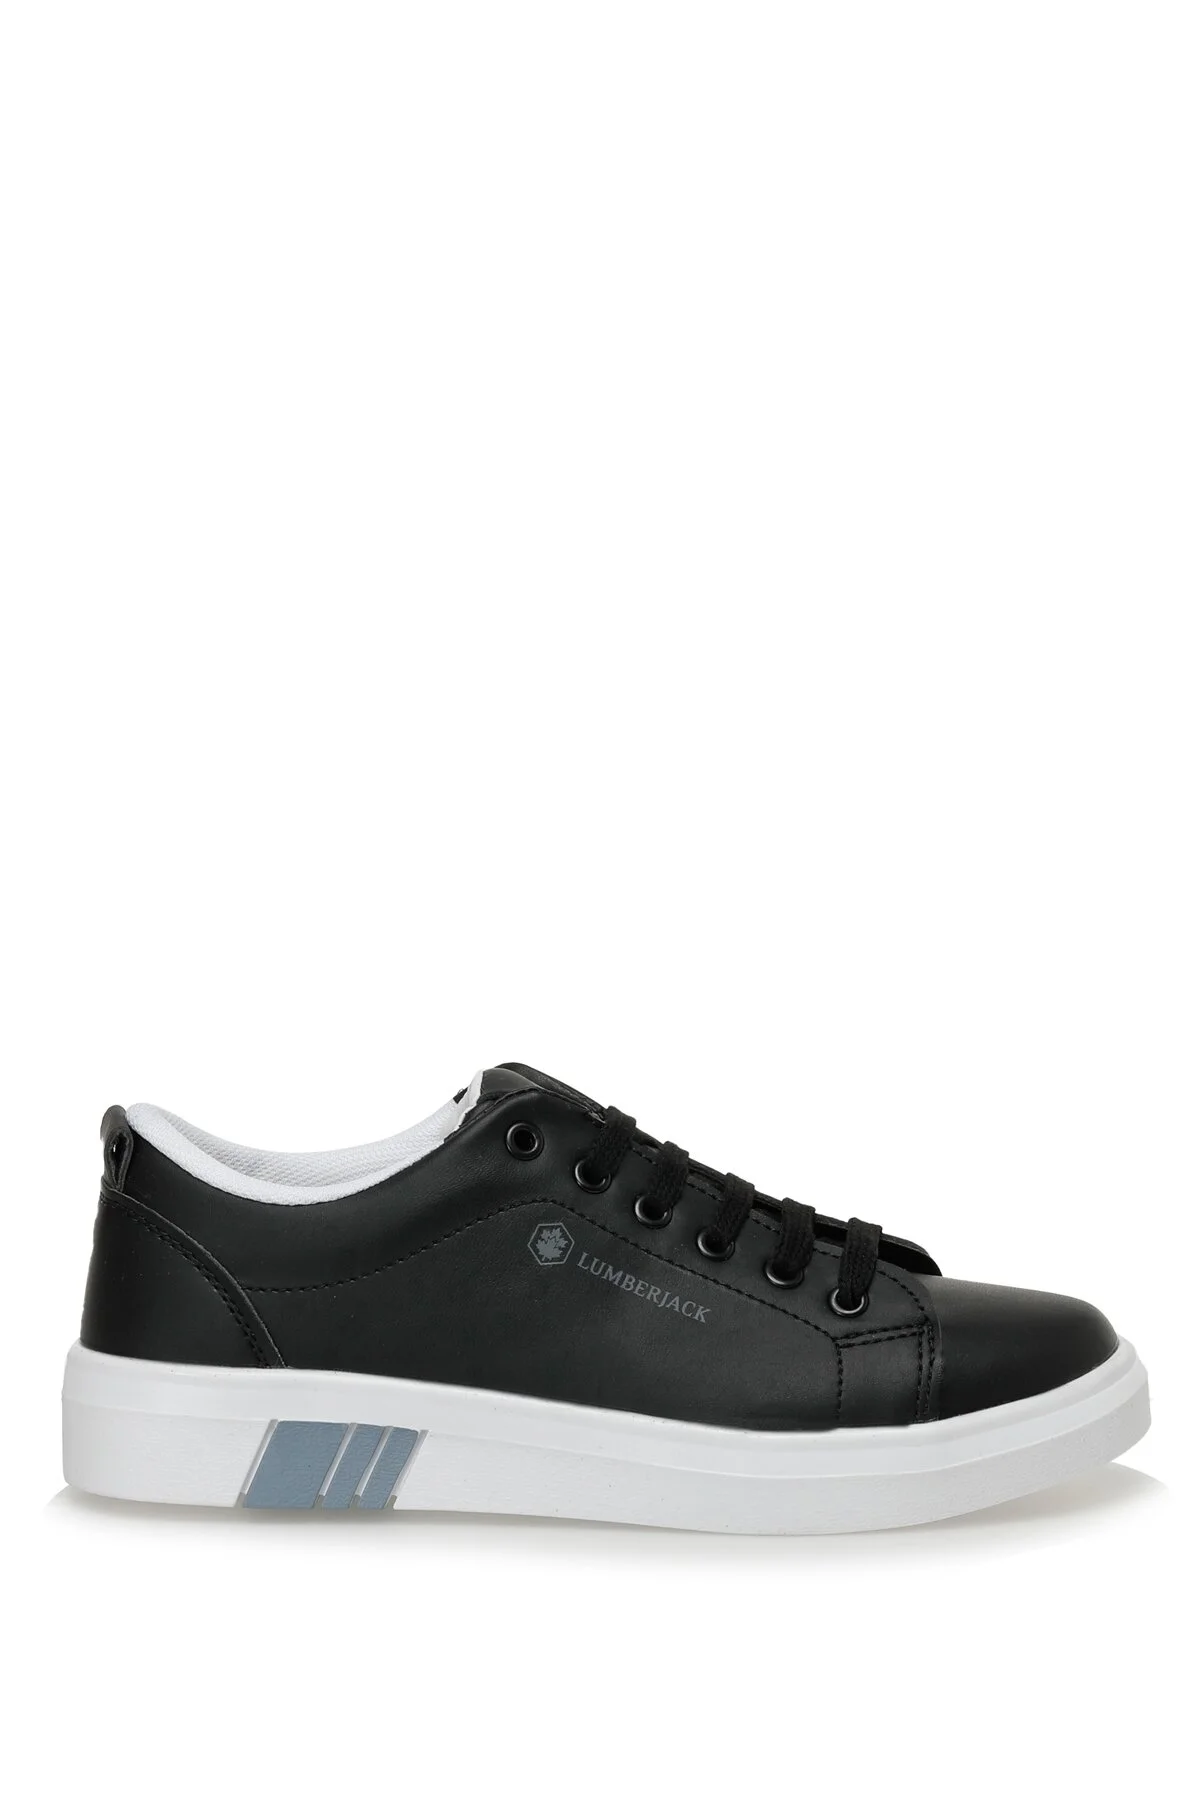 TINA 3FX Kadın Sneaker Spor Ayakkabı-Siyah